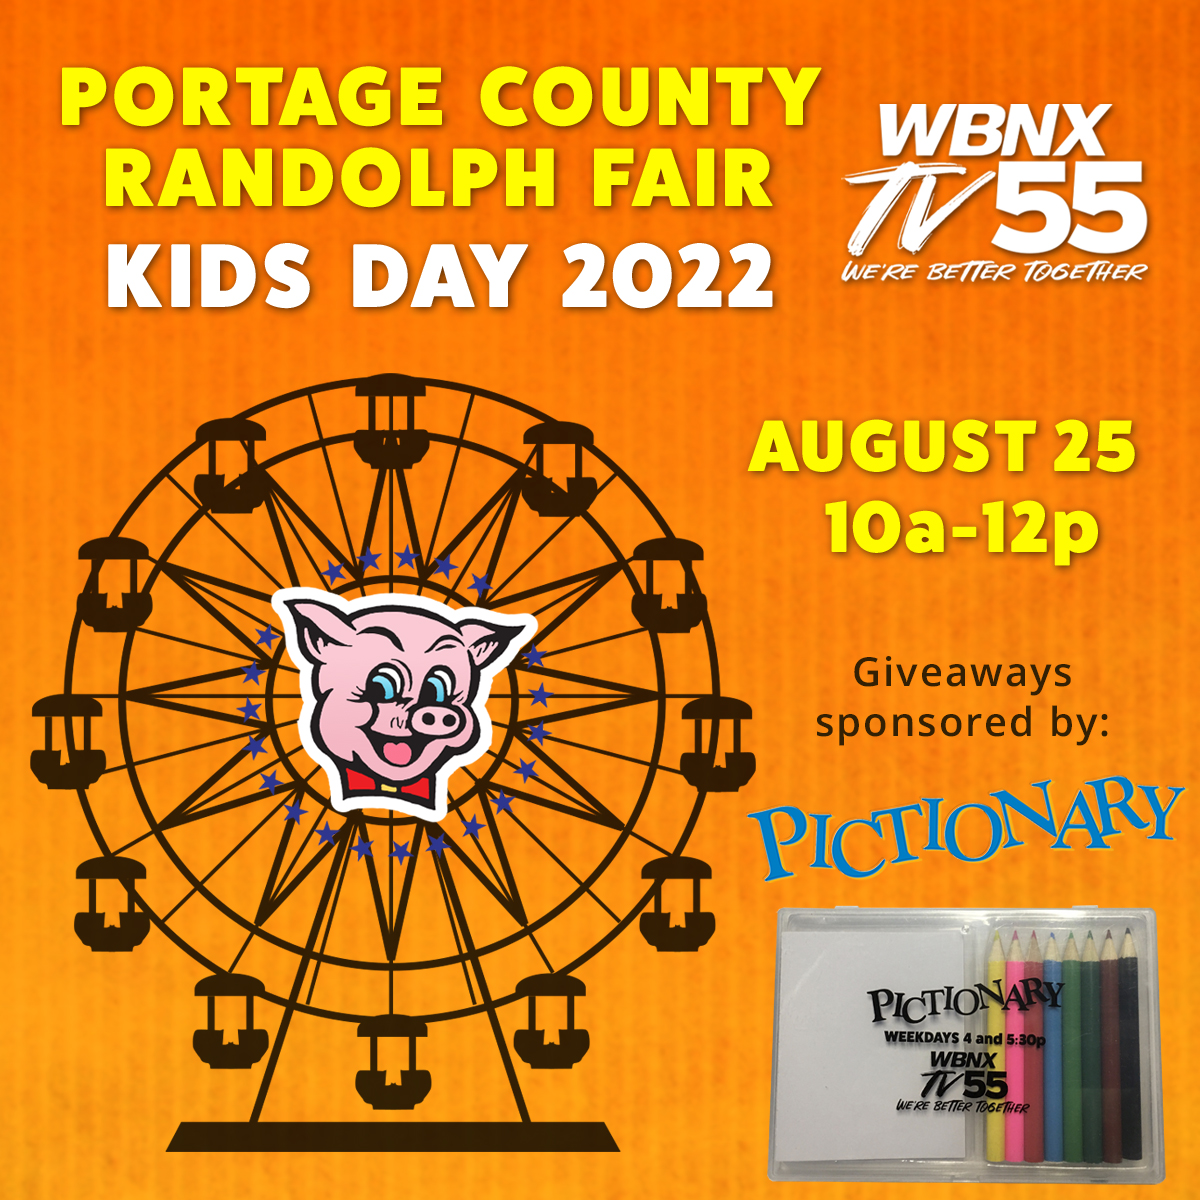 Portage County Randolph Fair Kids Day 2022